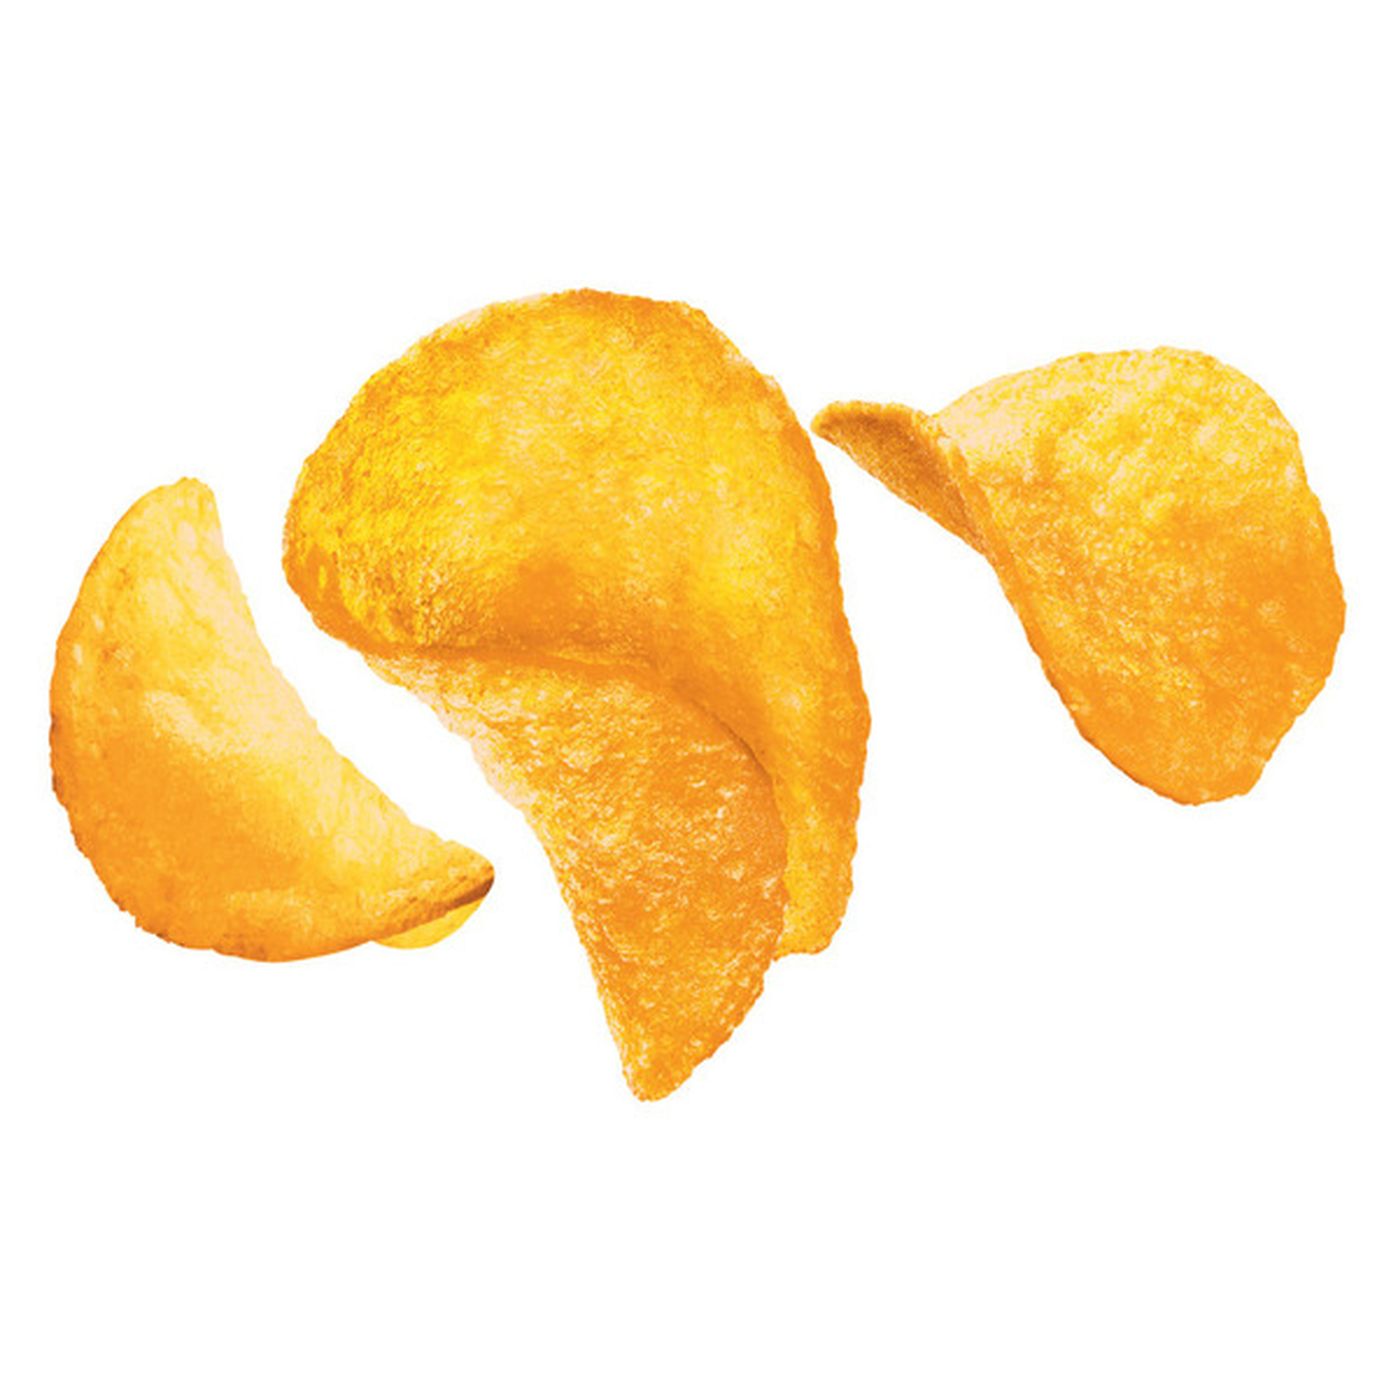 Takis Habanero Fury Kettle-Cooked Potato Chips 2.5 oz Bag (2.5 oz ...